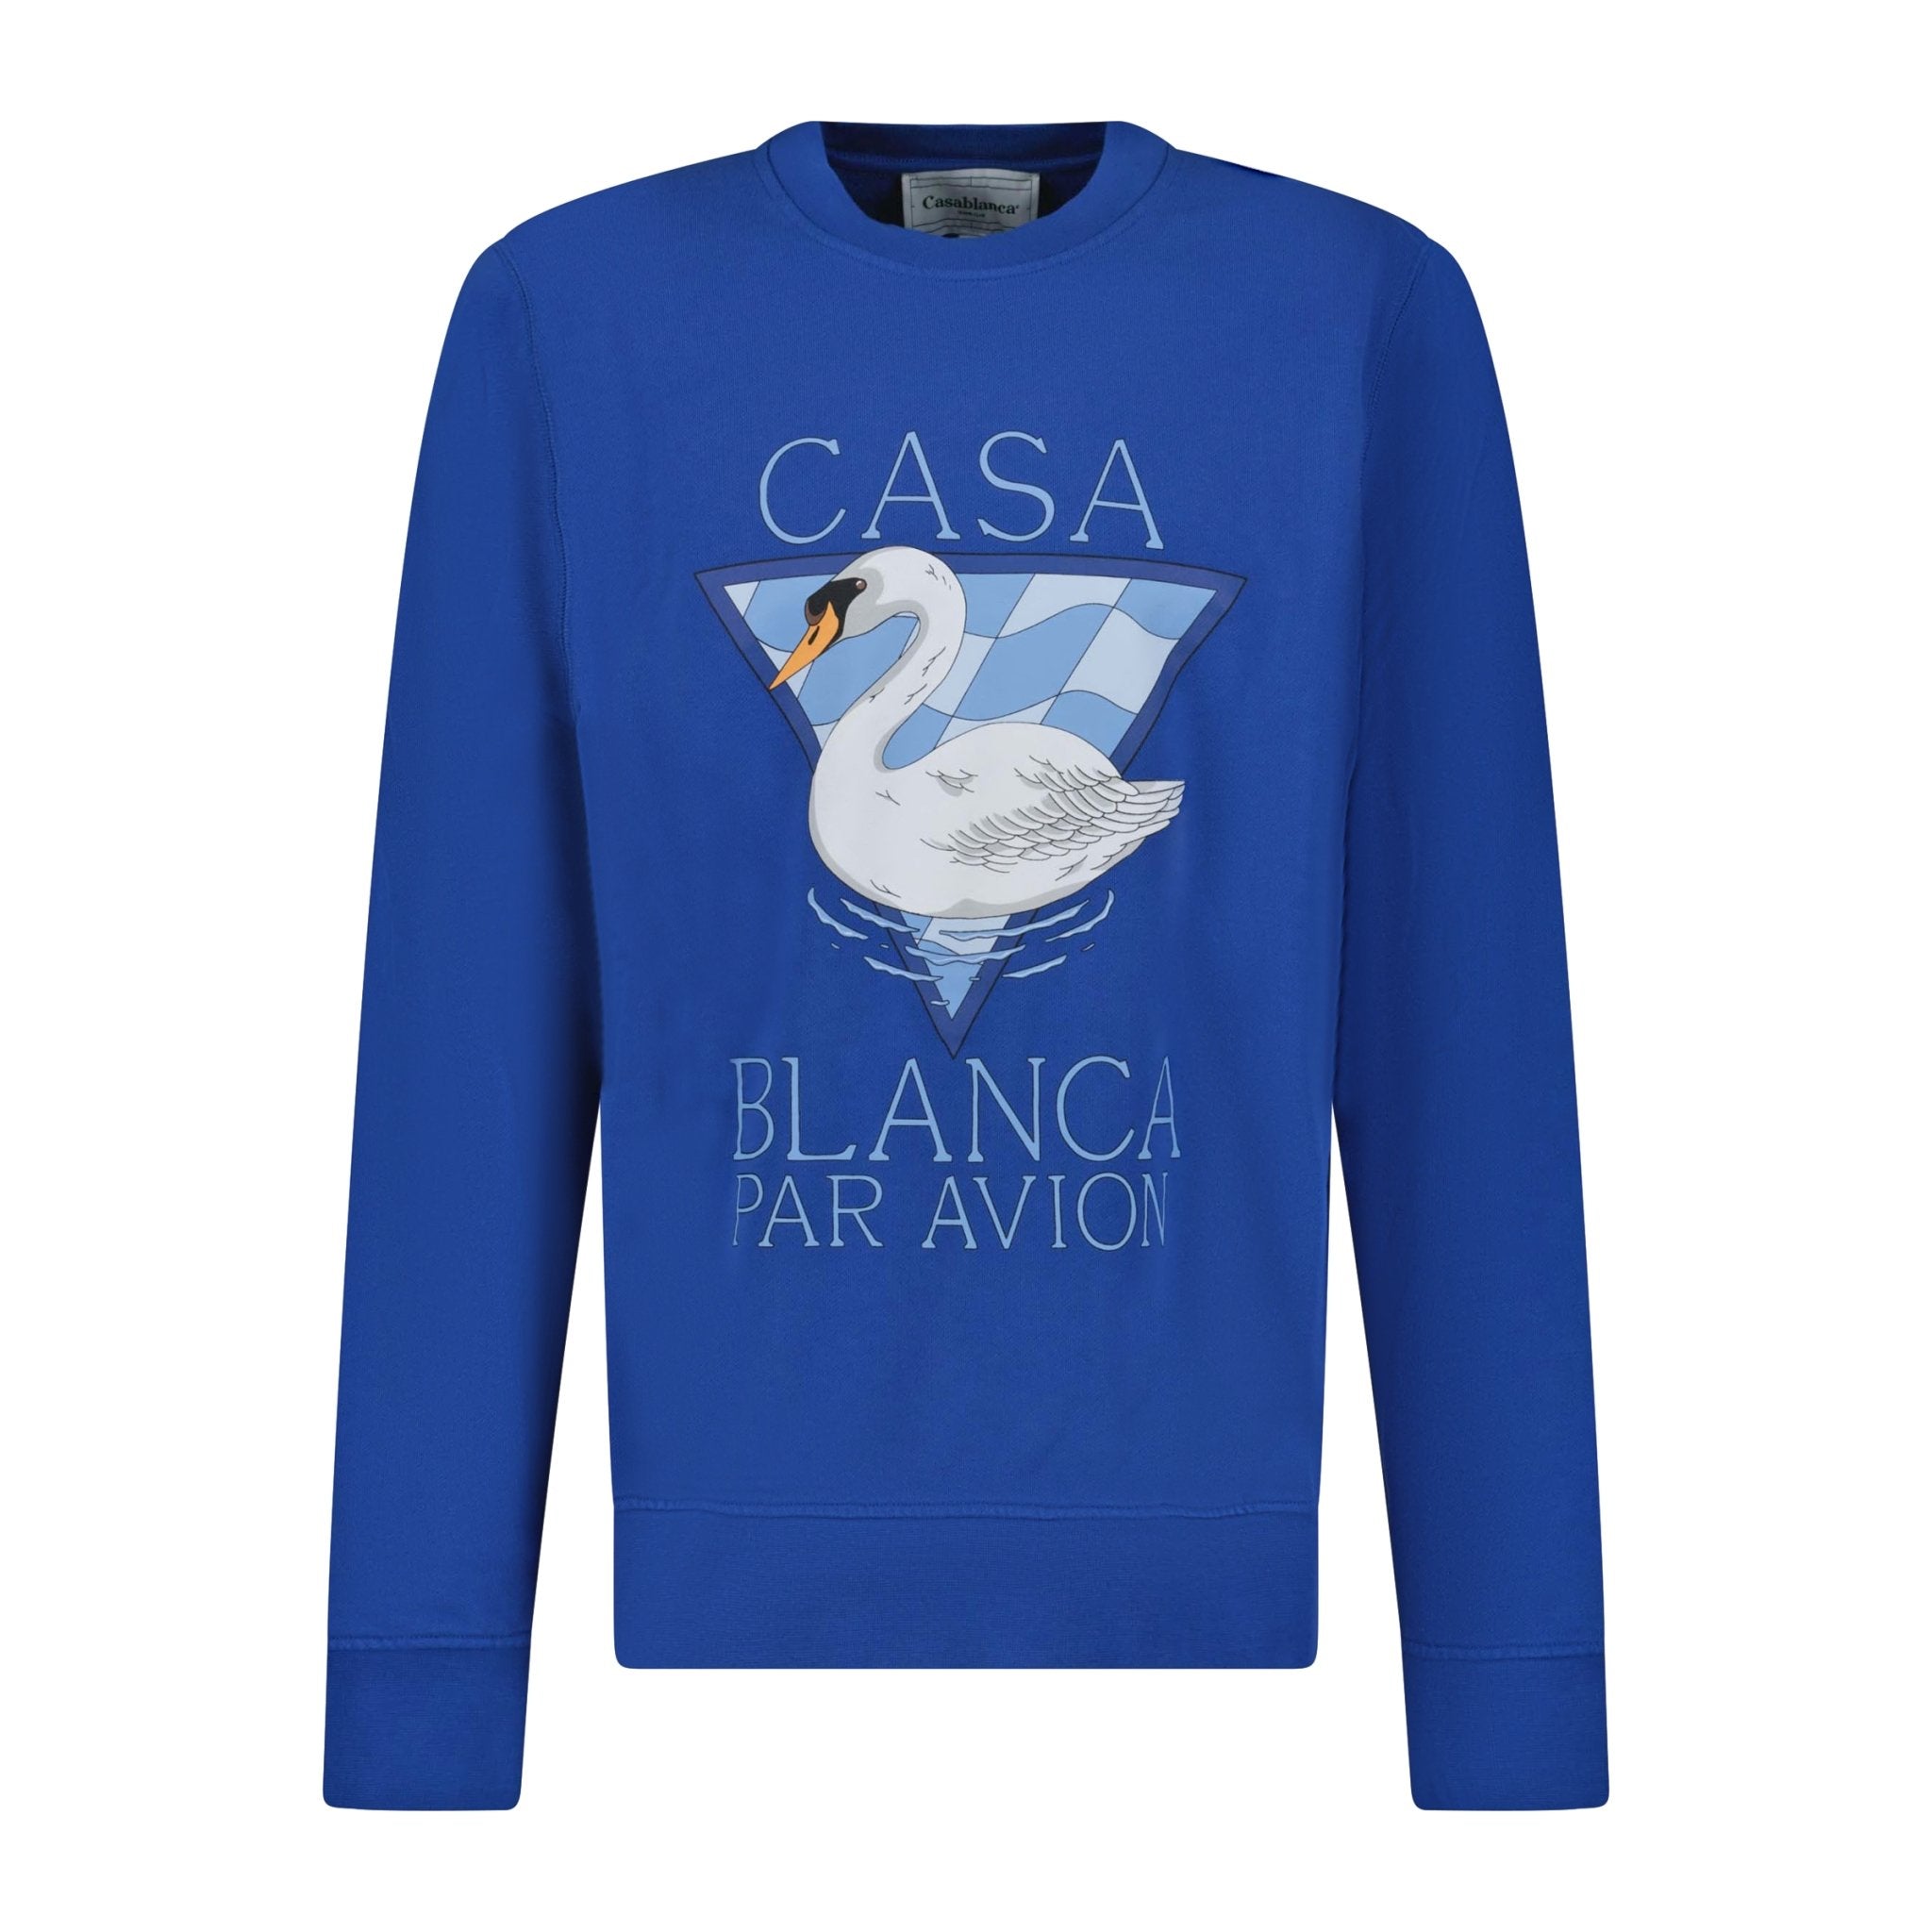 Casablanca 'Par Avion' Sweatshirt Blue